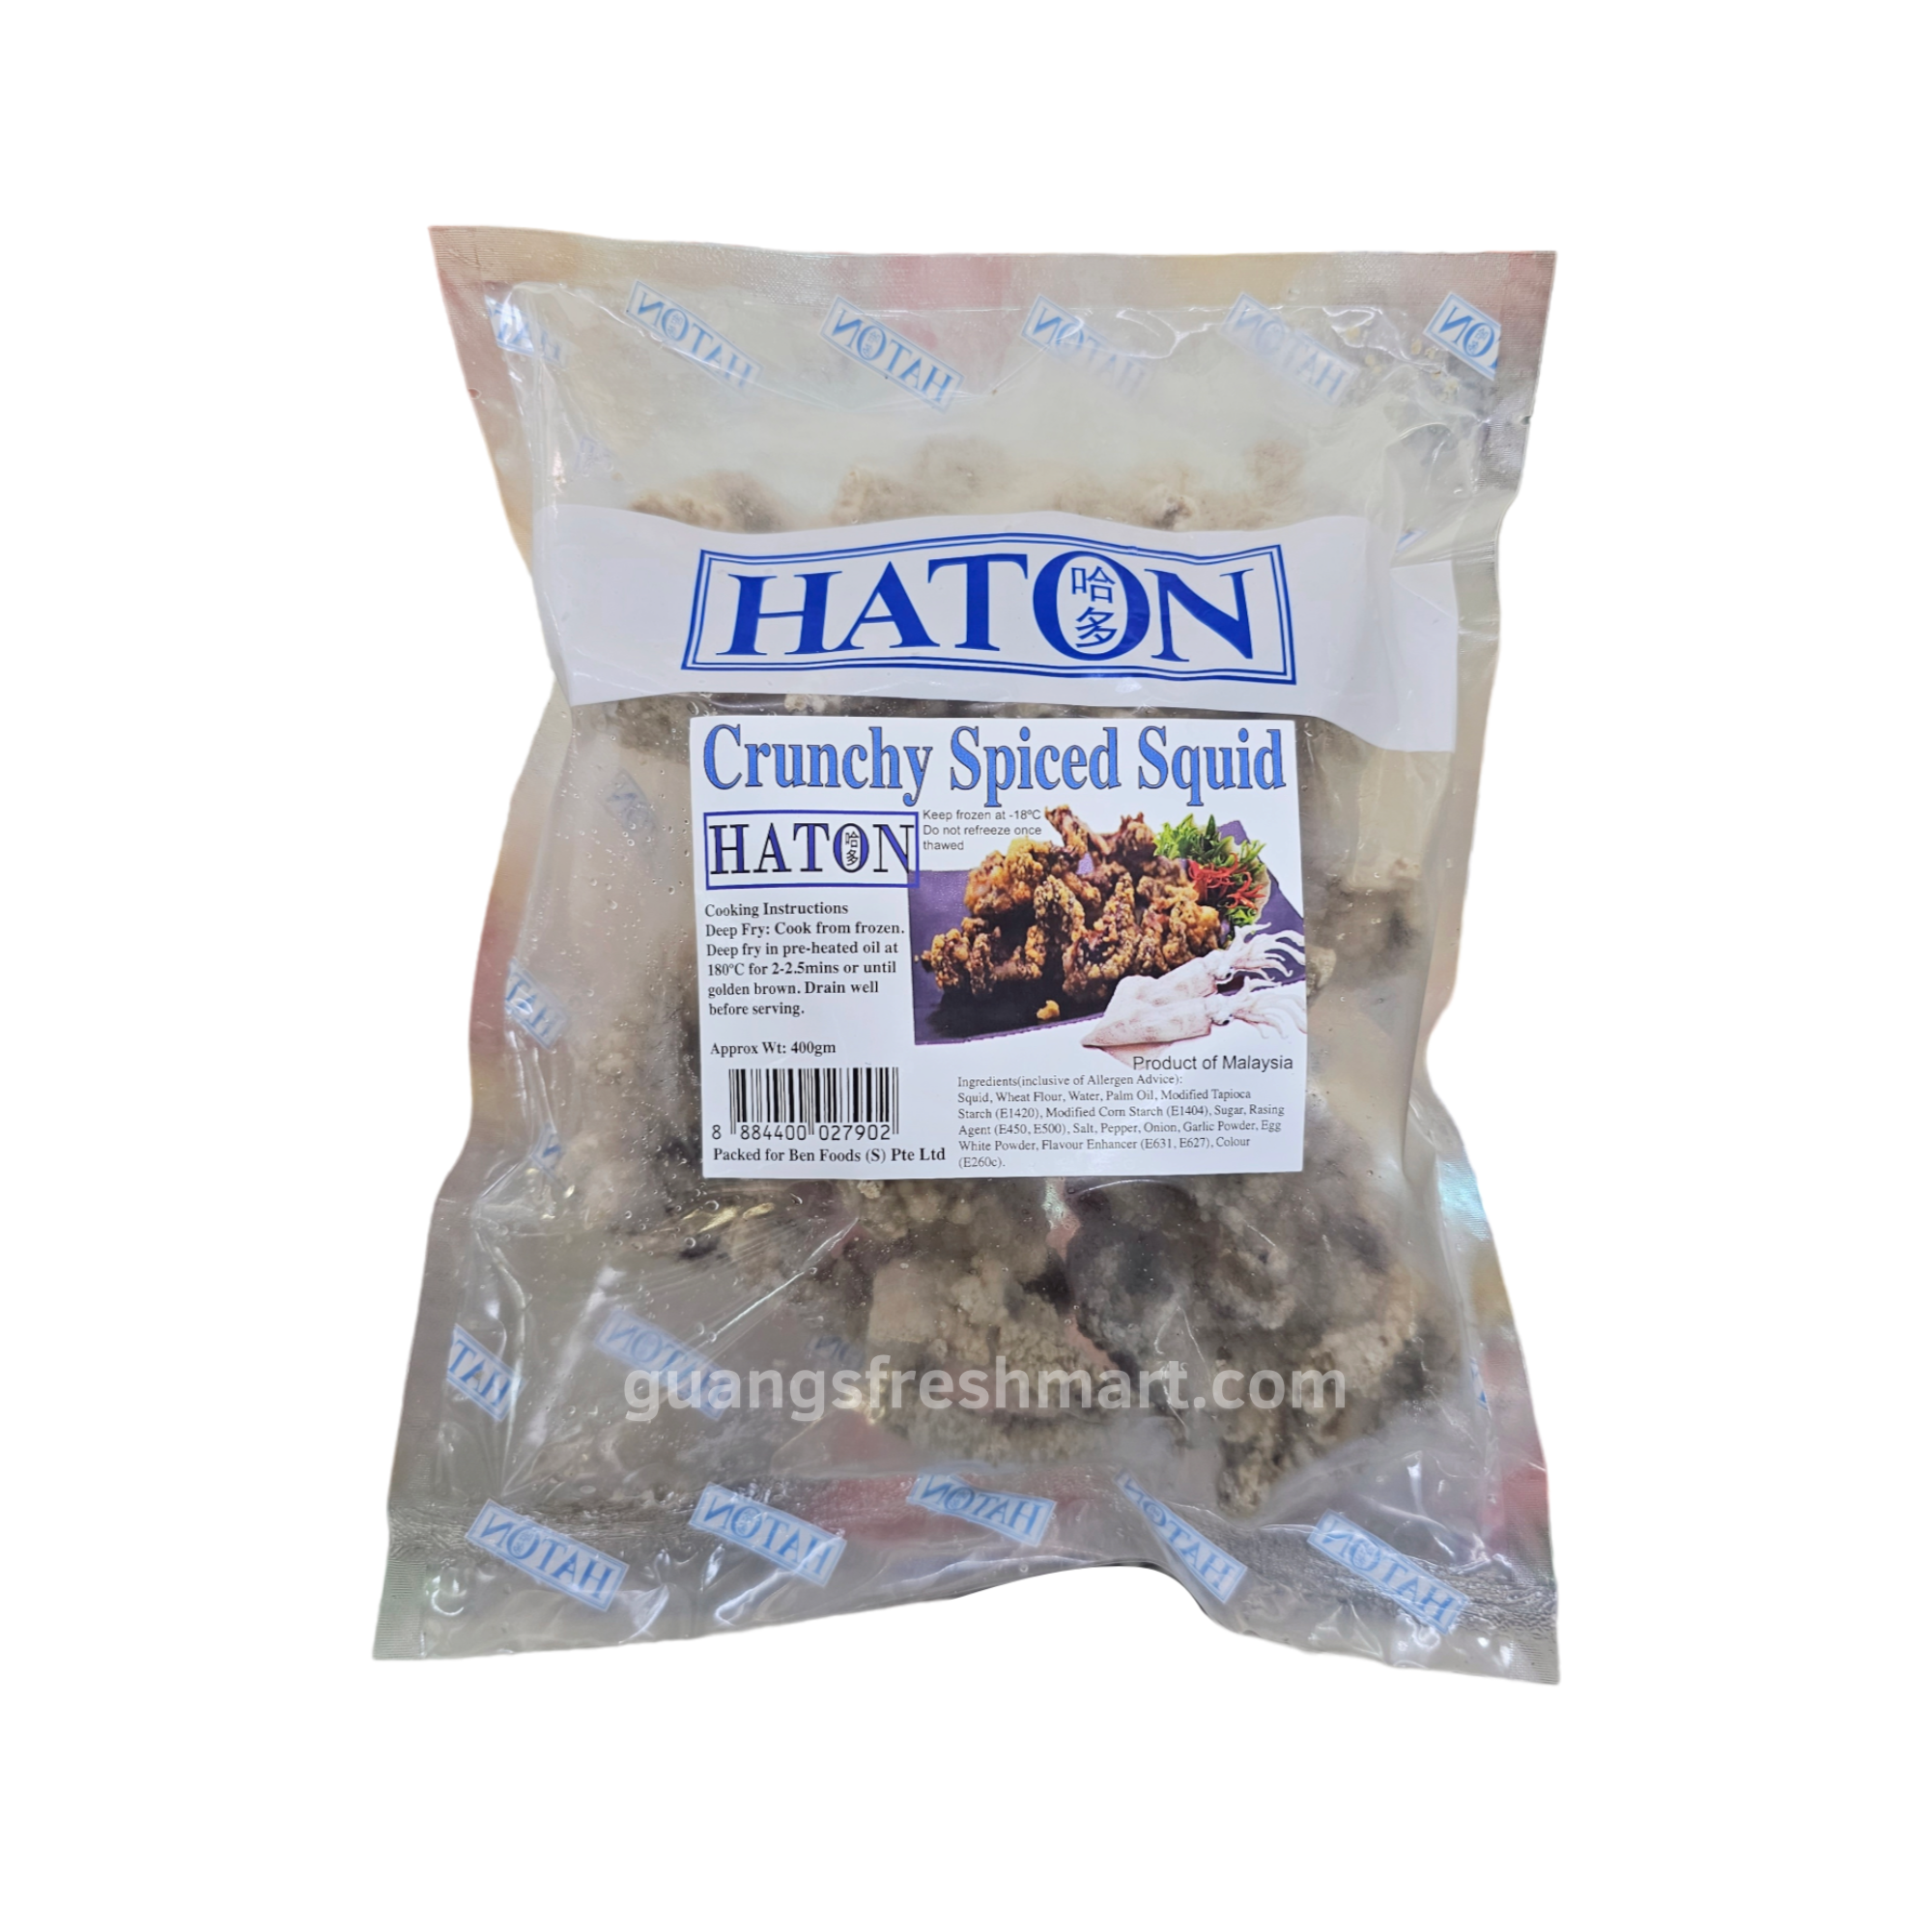 Haton Crunchy Spiced Squid (400g)